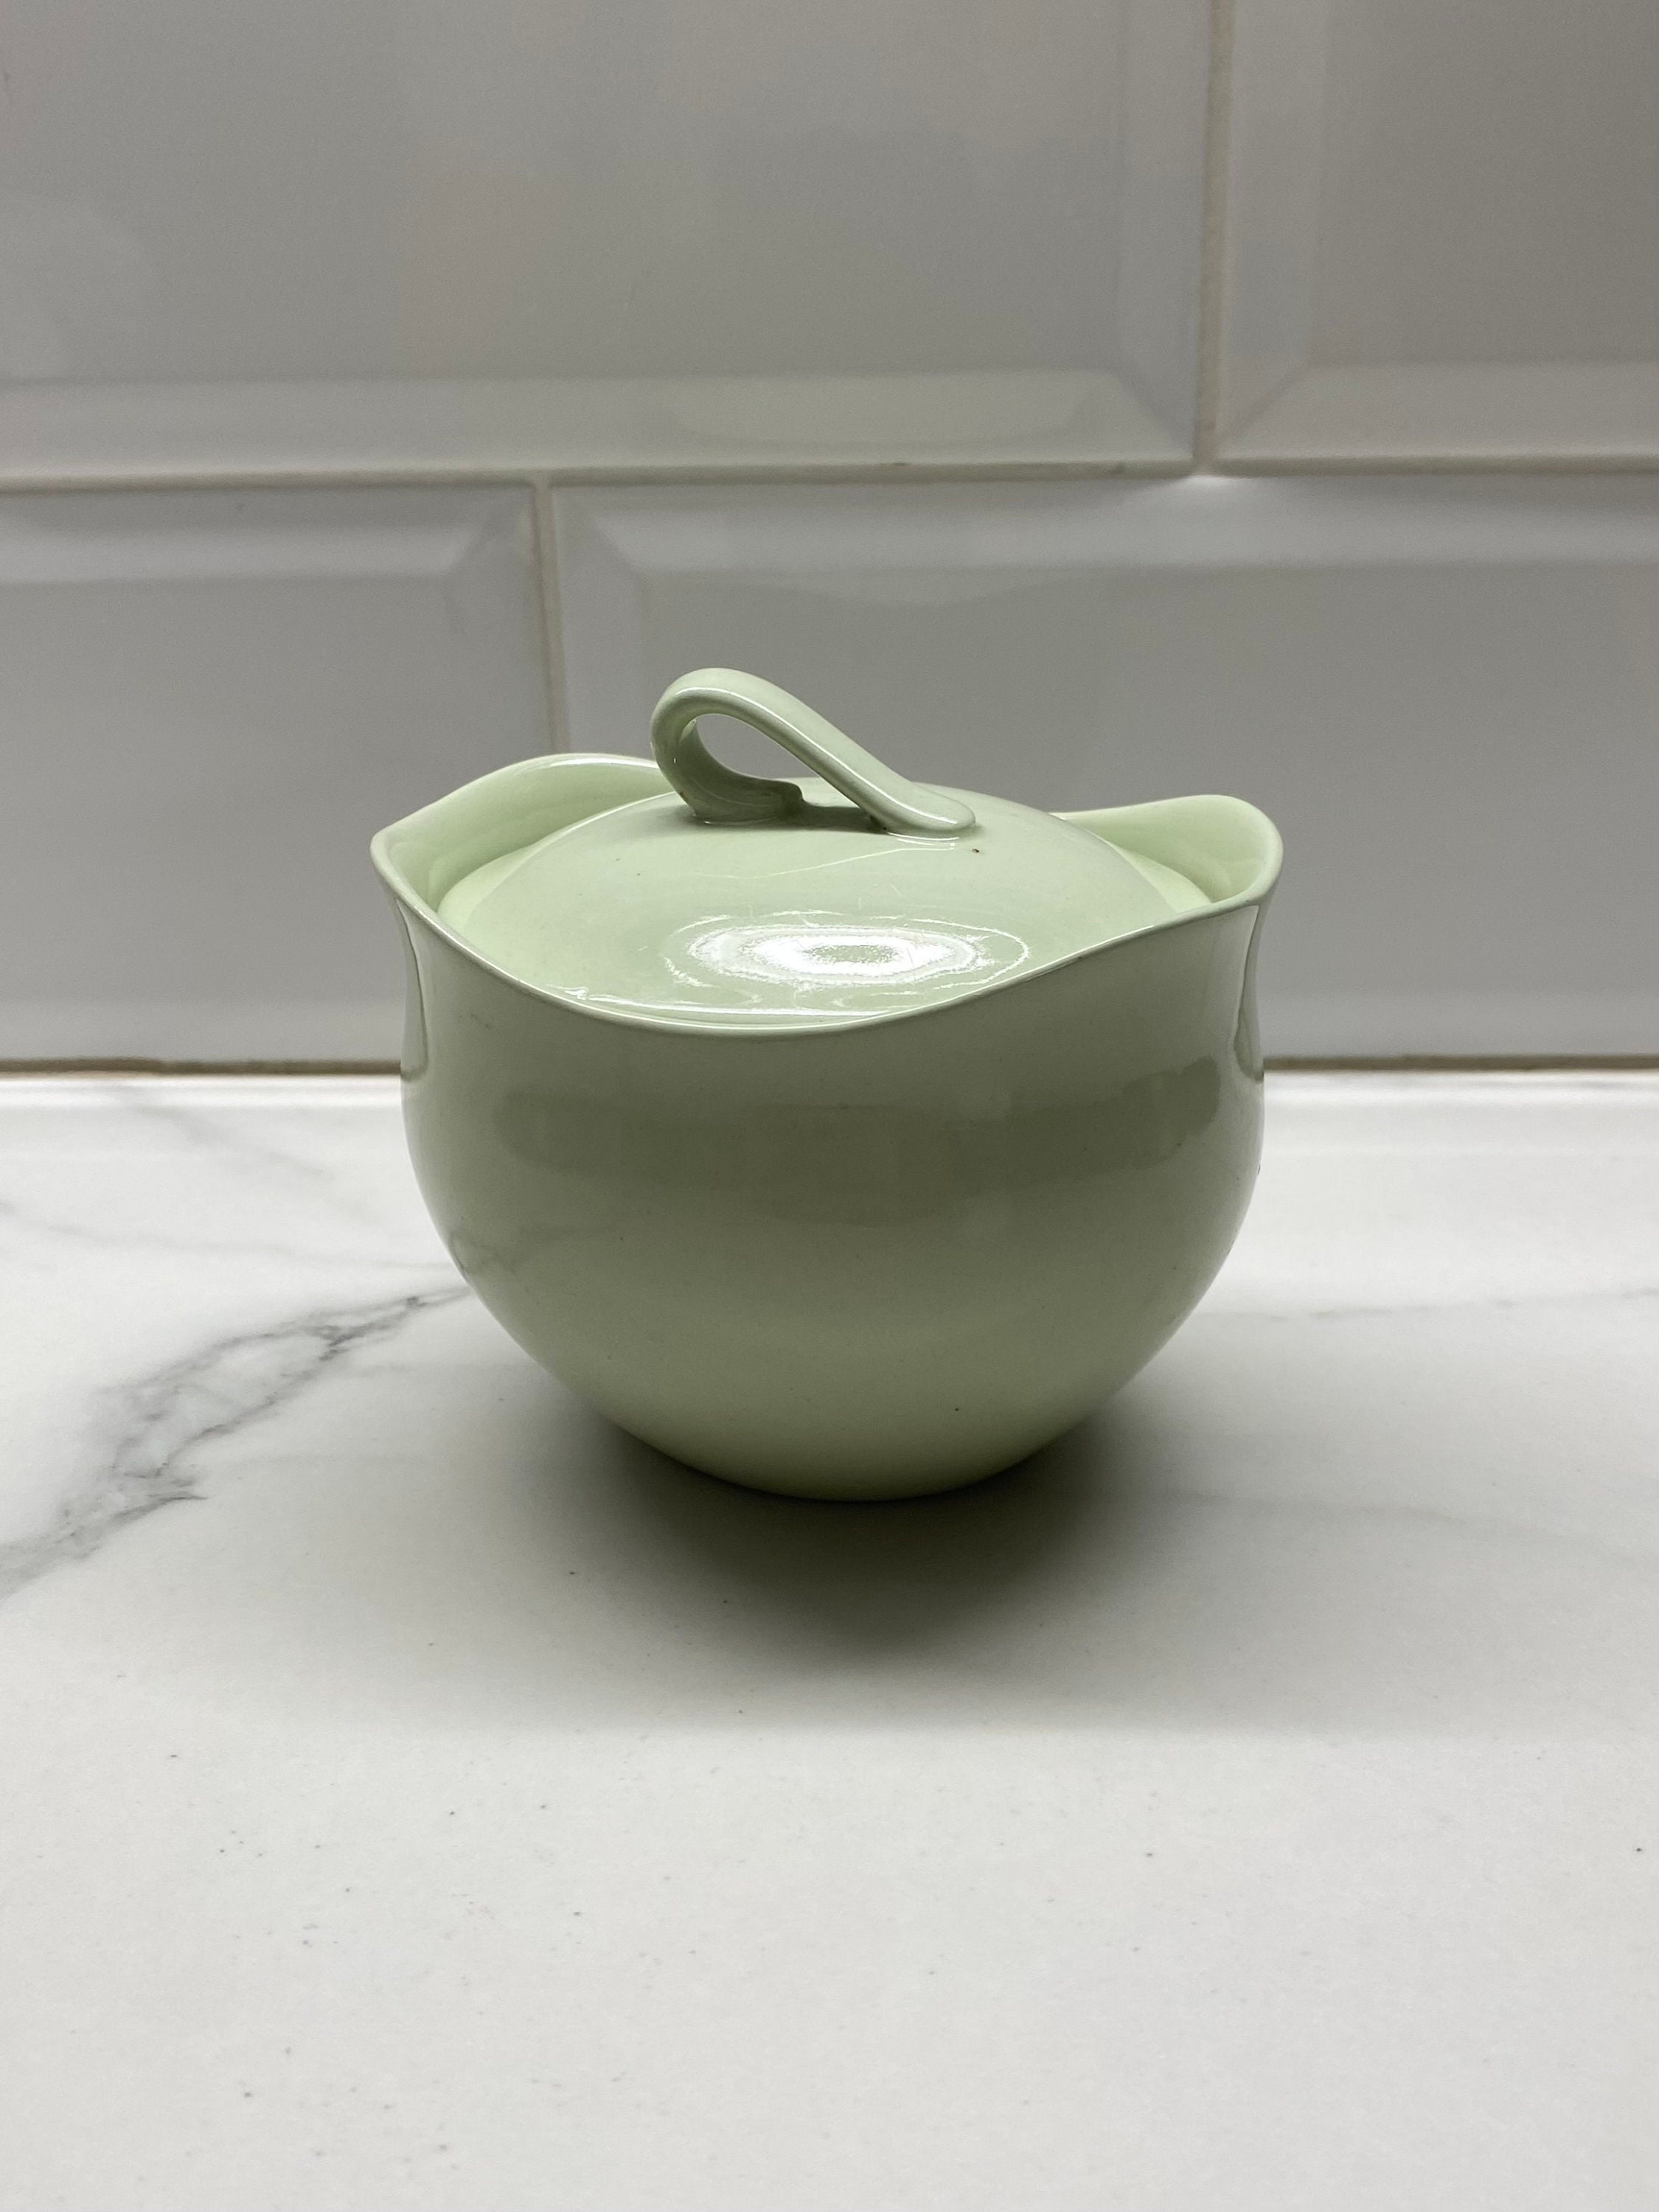 5 Quart Sage Leaf Ceramic Bowl